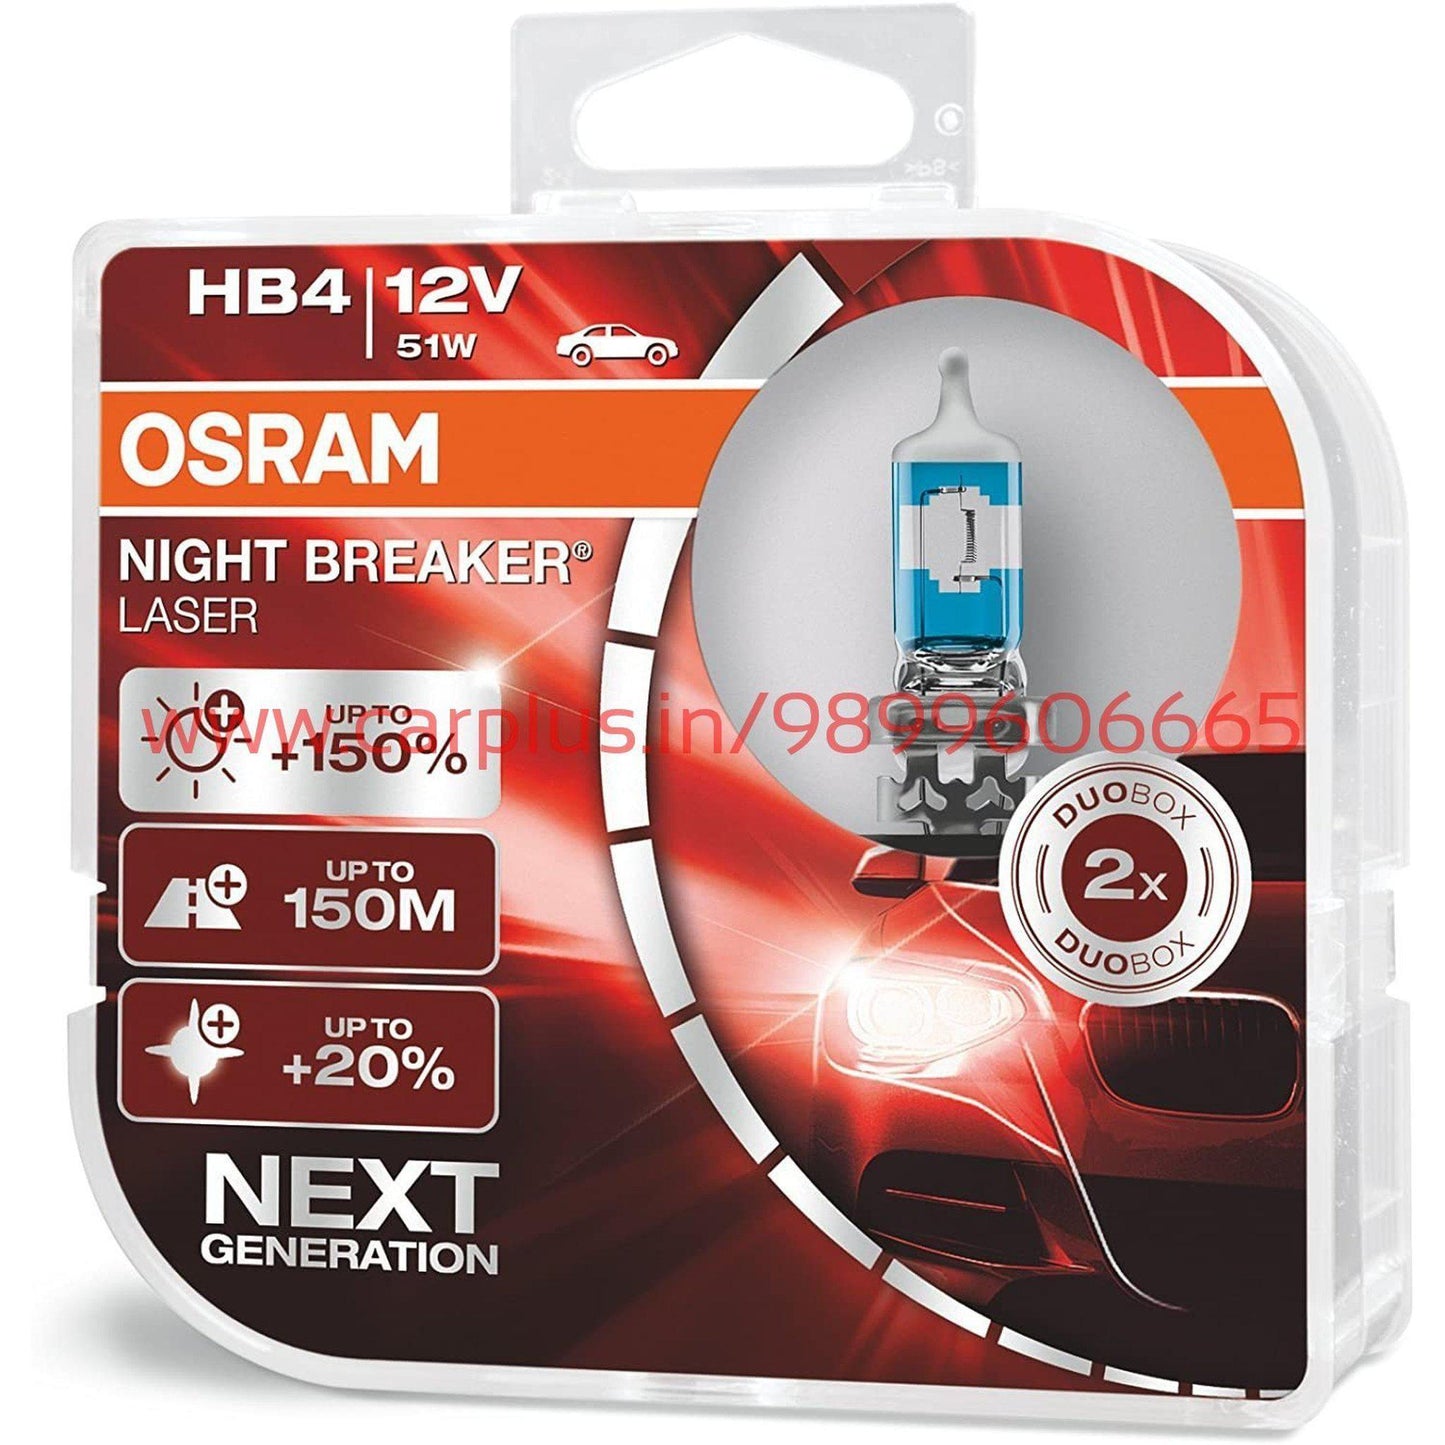 New Osram Hyper Spot 4D 500W 52inch LED Light Bar - China Osram